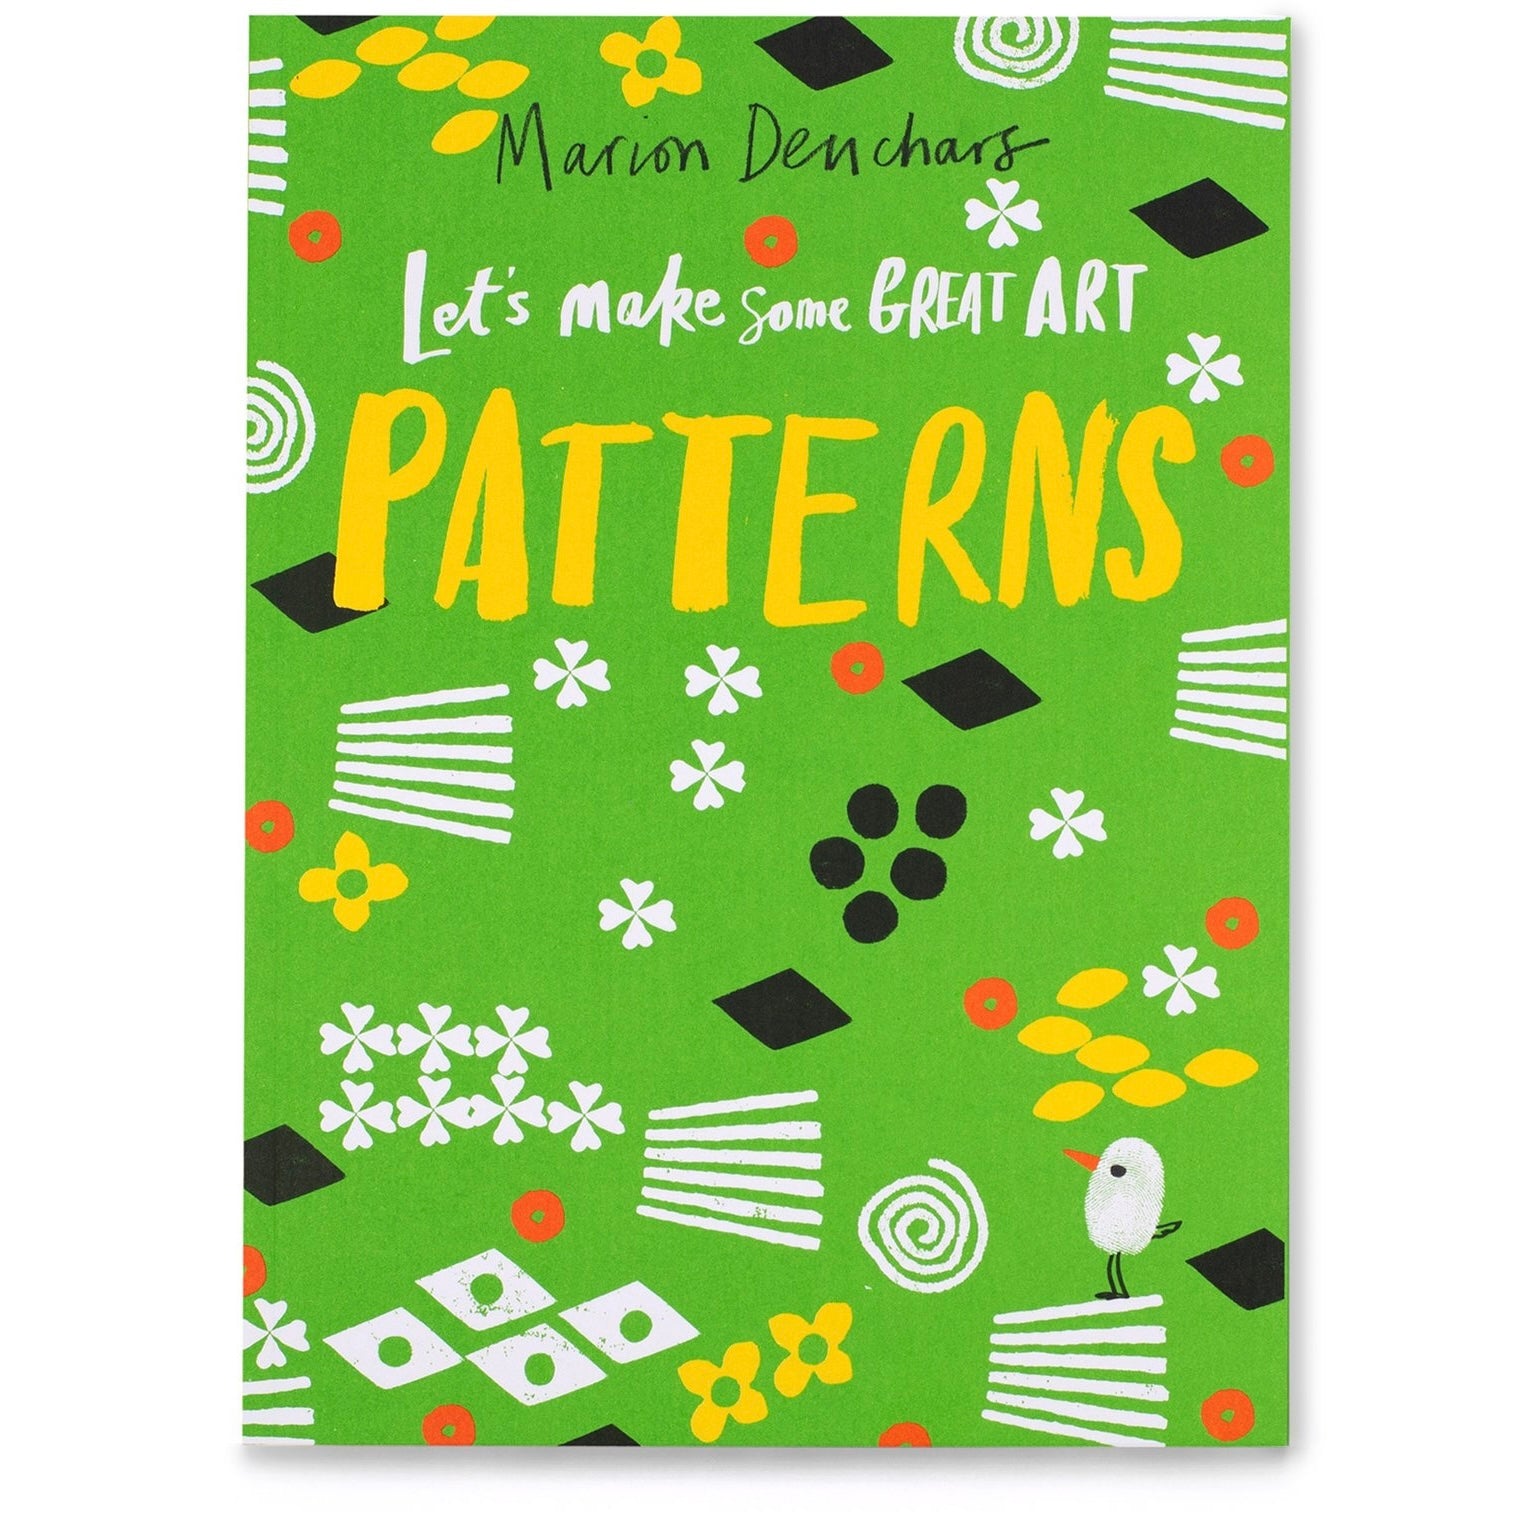 Let’s make some Great Art - Patterns